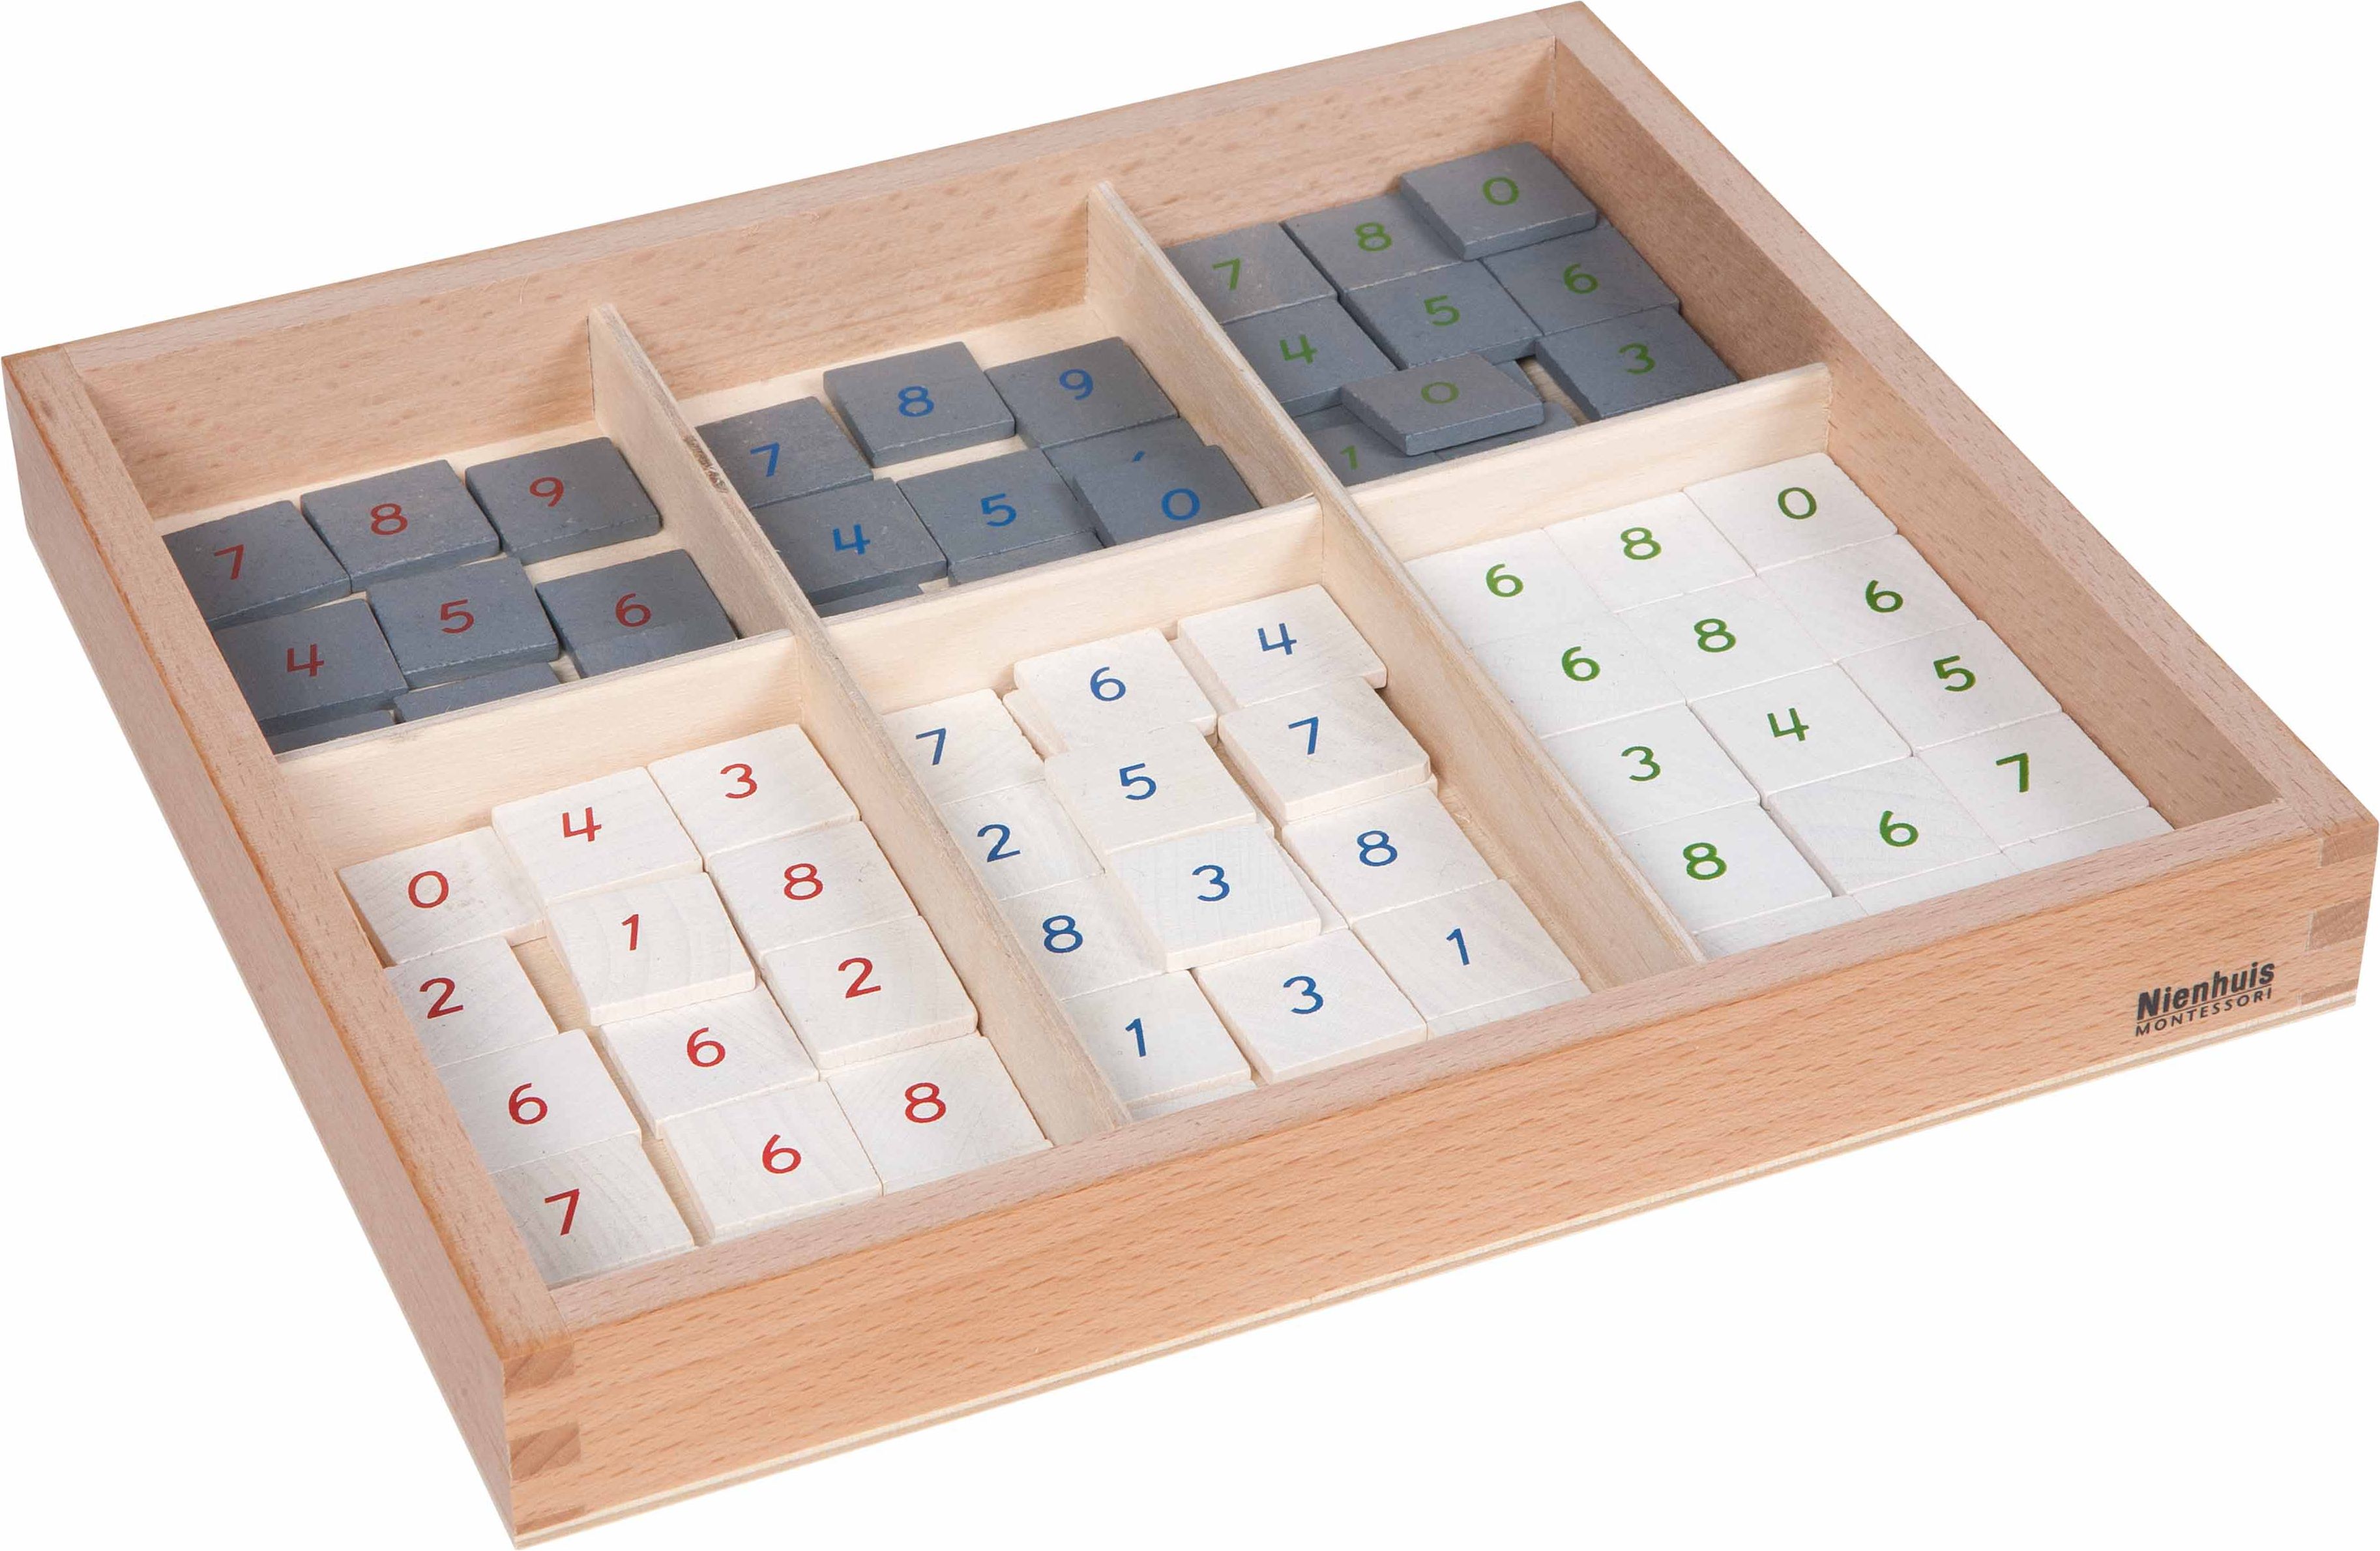 Nienhuis Montessori Number Tiles - obrázek 1